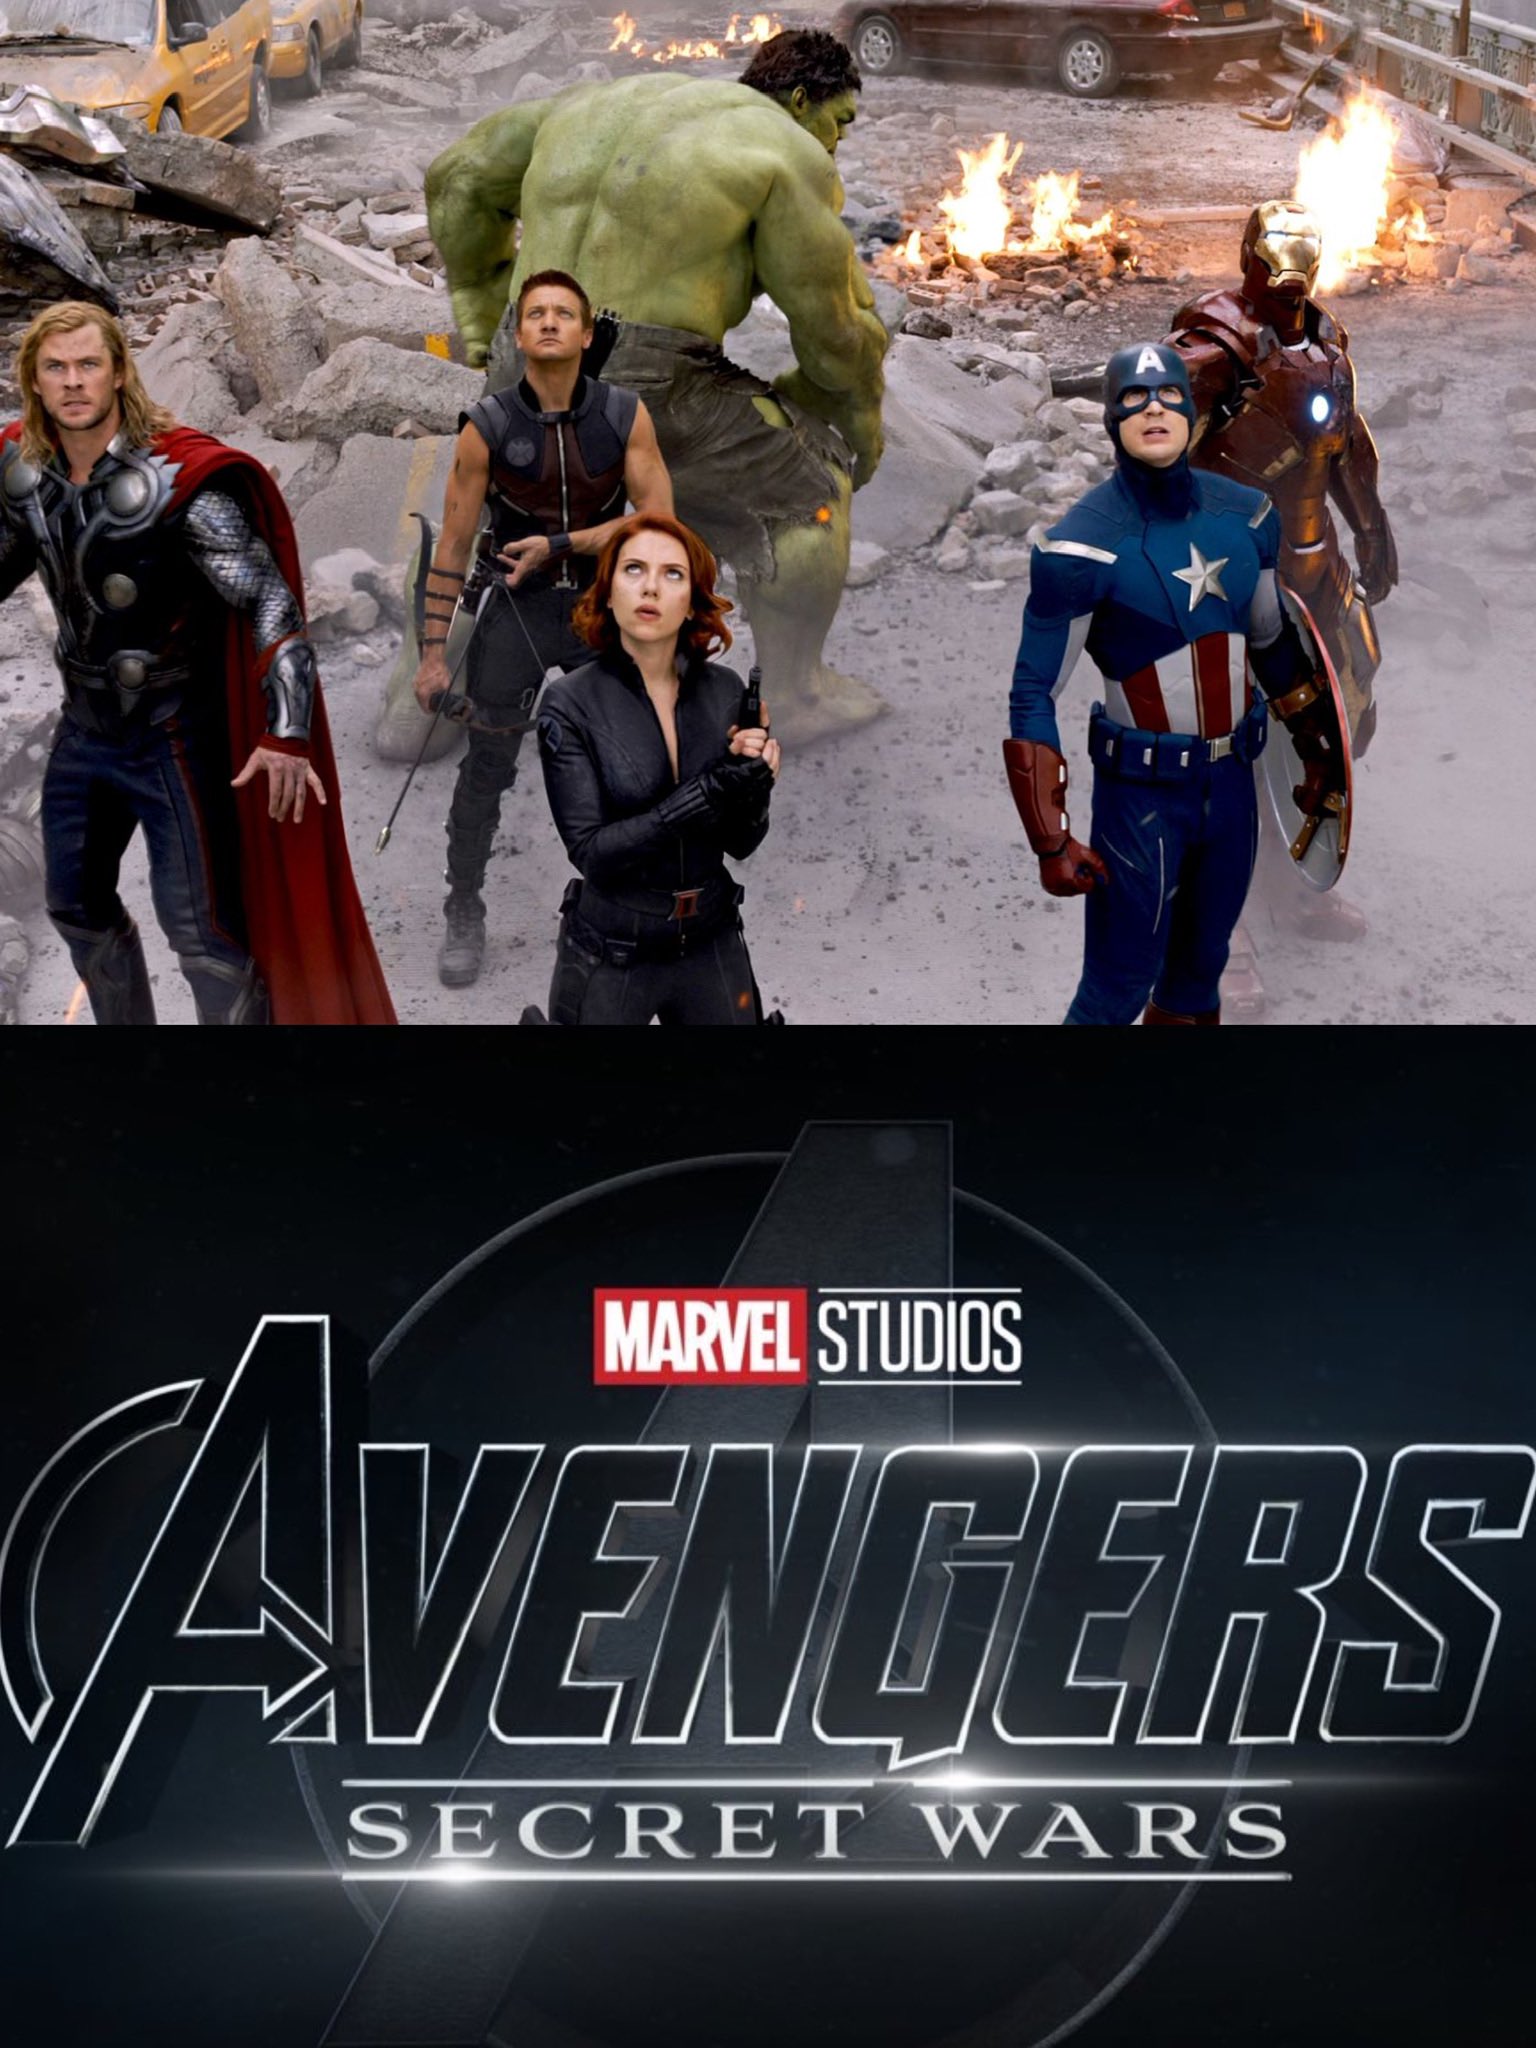 BLURAYANGEL 🦇 on X: If this concept art of Avengers: Kang